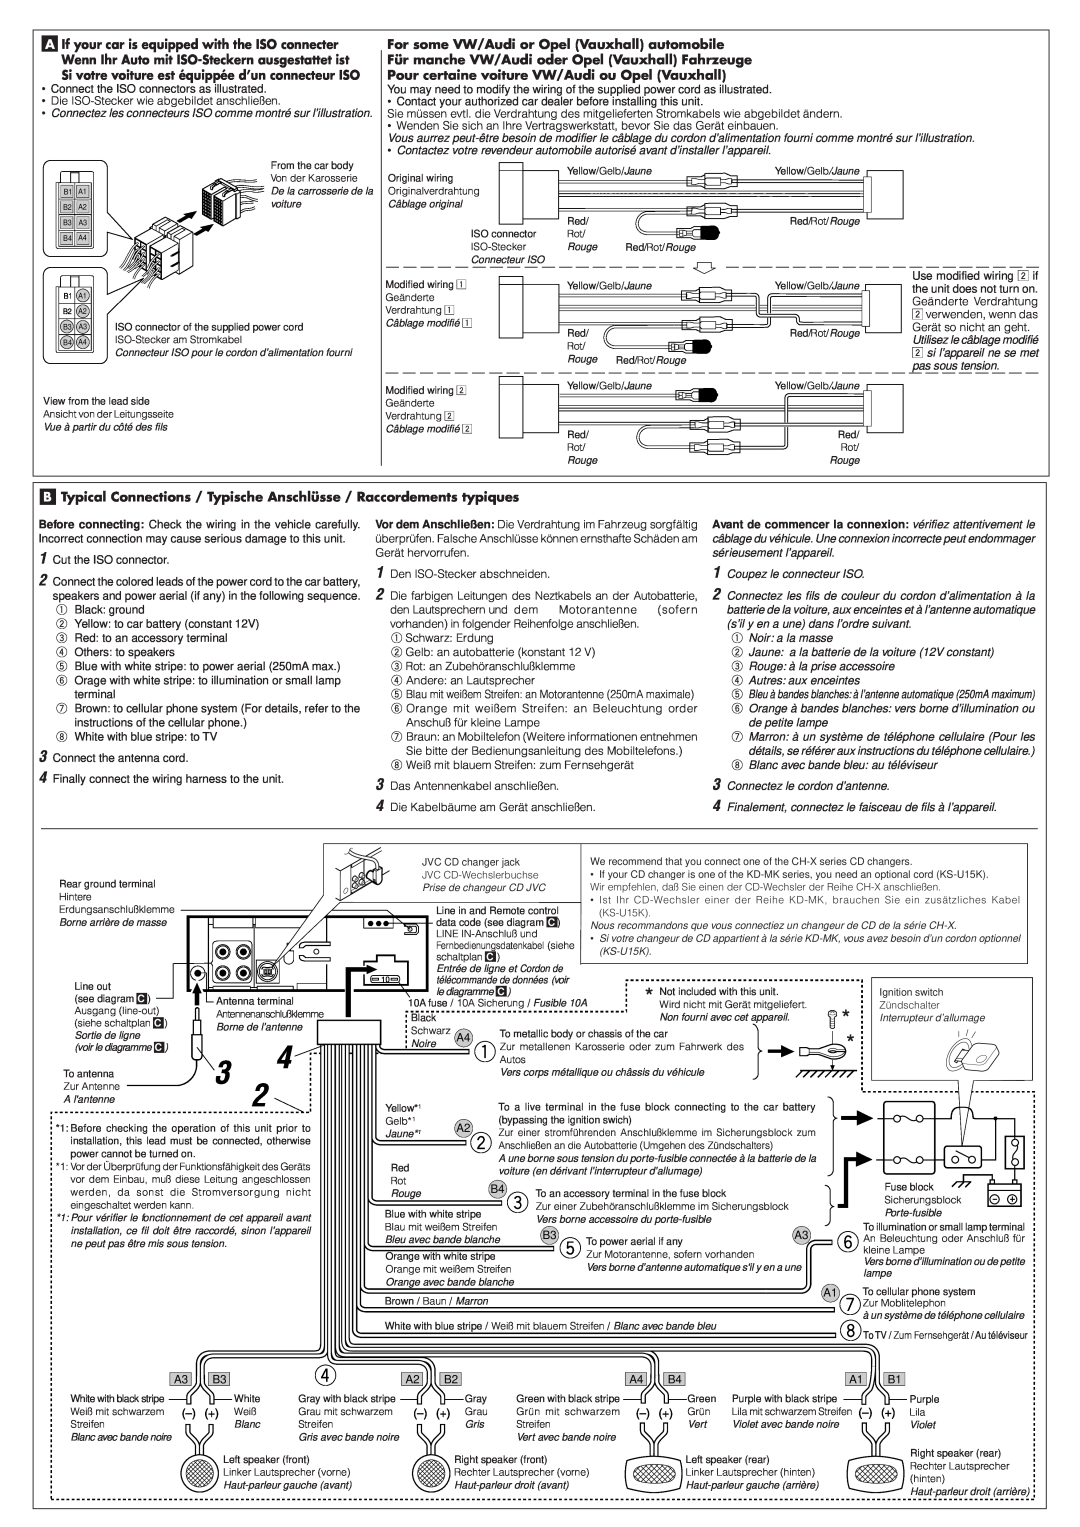 JVC KD-SX1000R manual For some VW/Audi or Opel Vauxhall automobile, Für manche VW/Audi oder Opel Vauxhall Fahrzeuge 